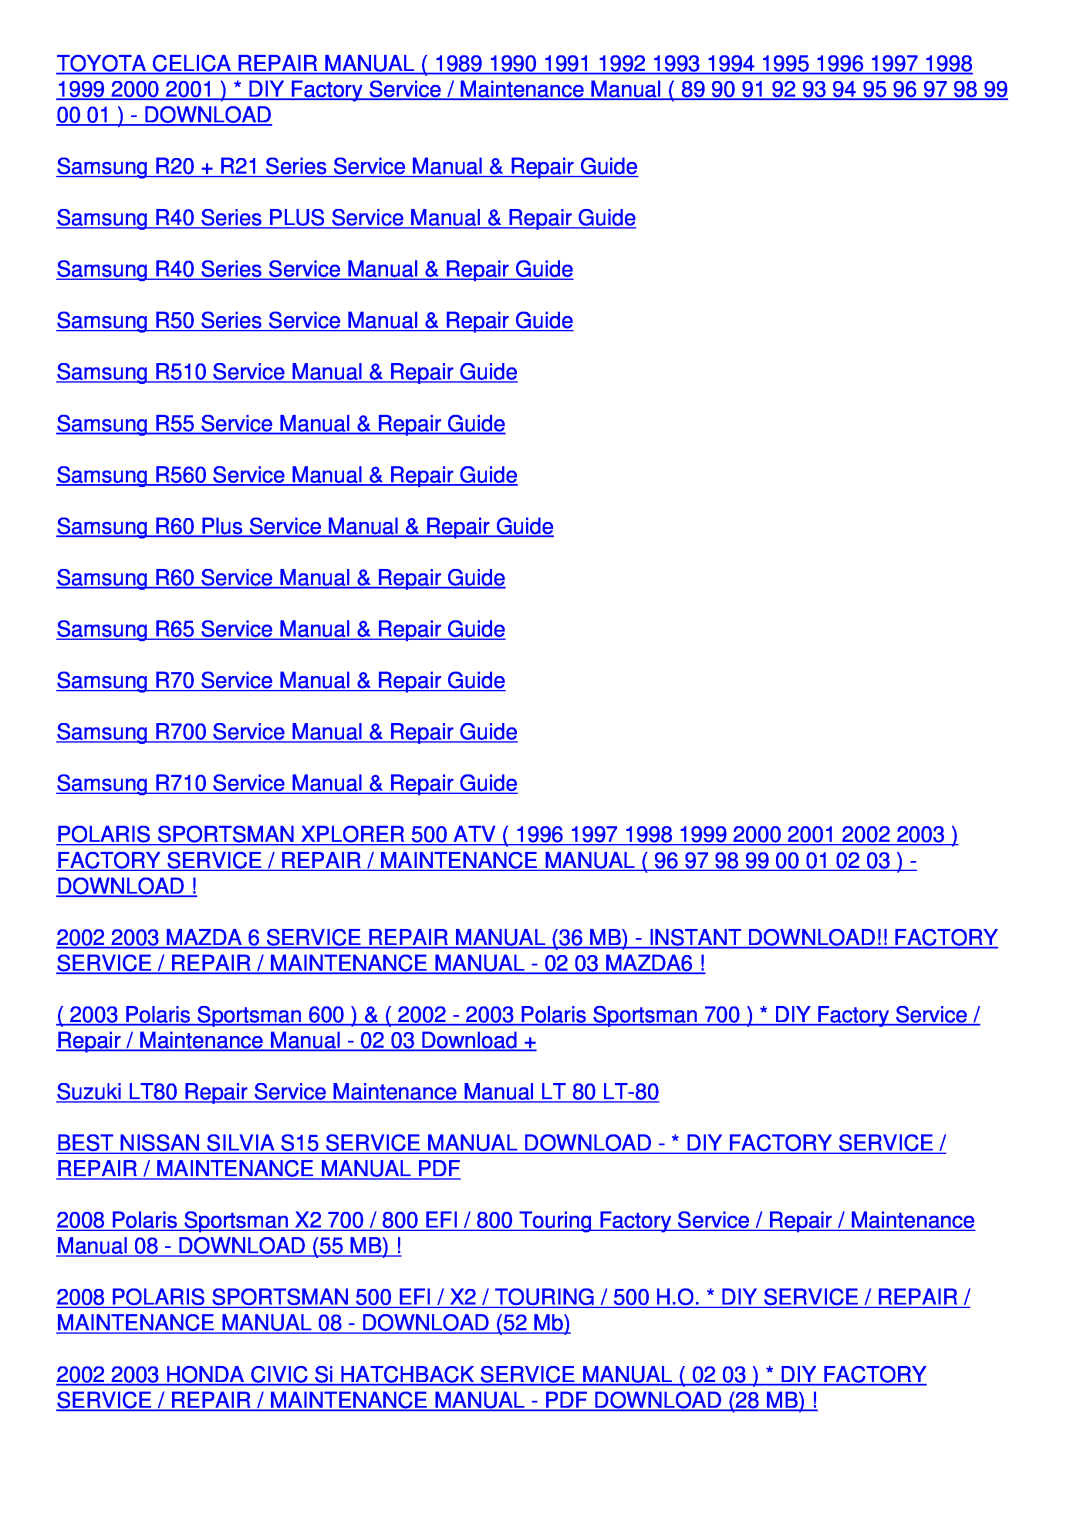 Samsung R710 Samsung R20 + R21 Series Service Manual & Repair Guide, Samsung R40 Series PLUS Service Manual & Repair Guide 